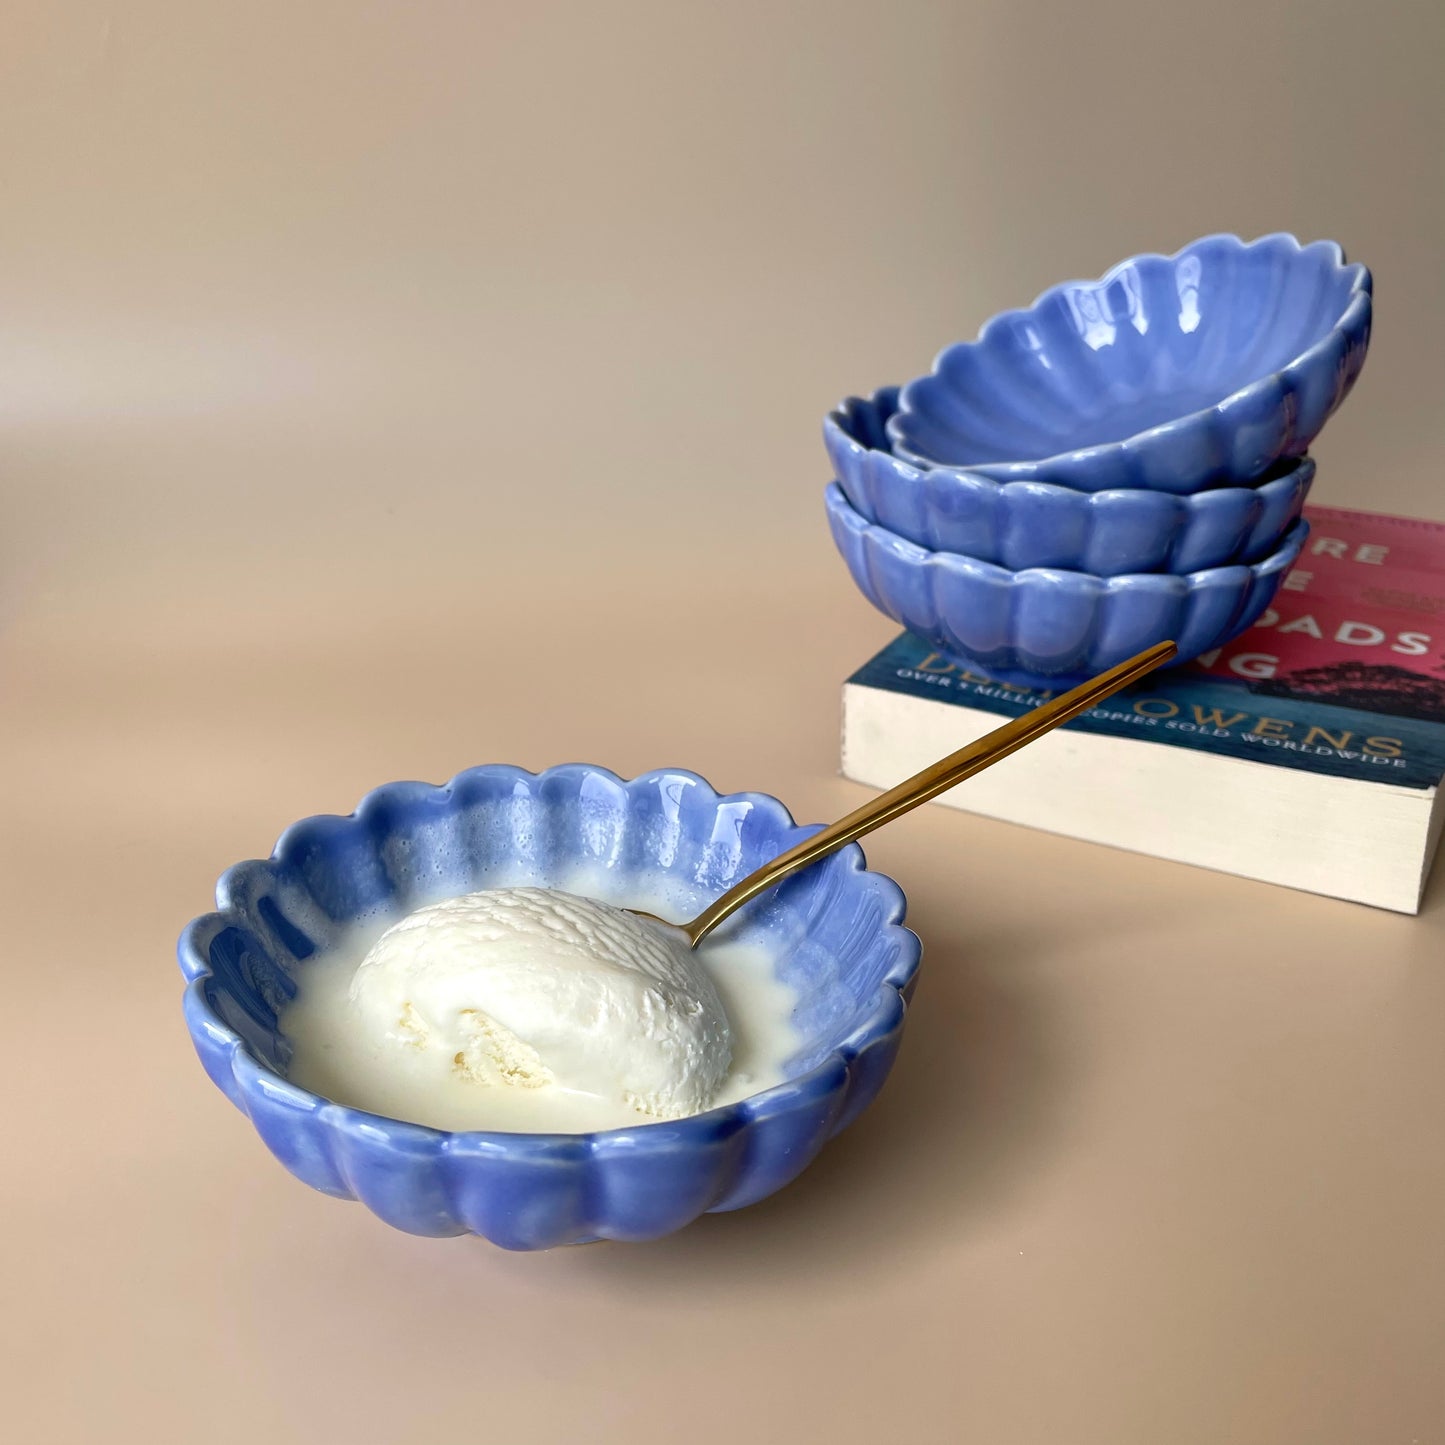 Floral ice cream bowl - blue